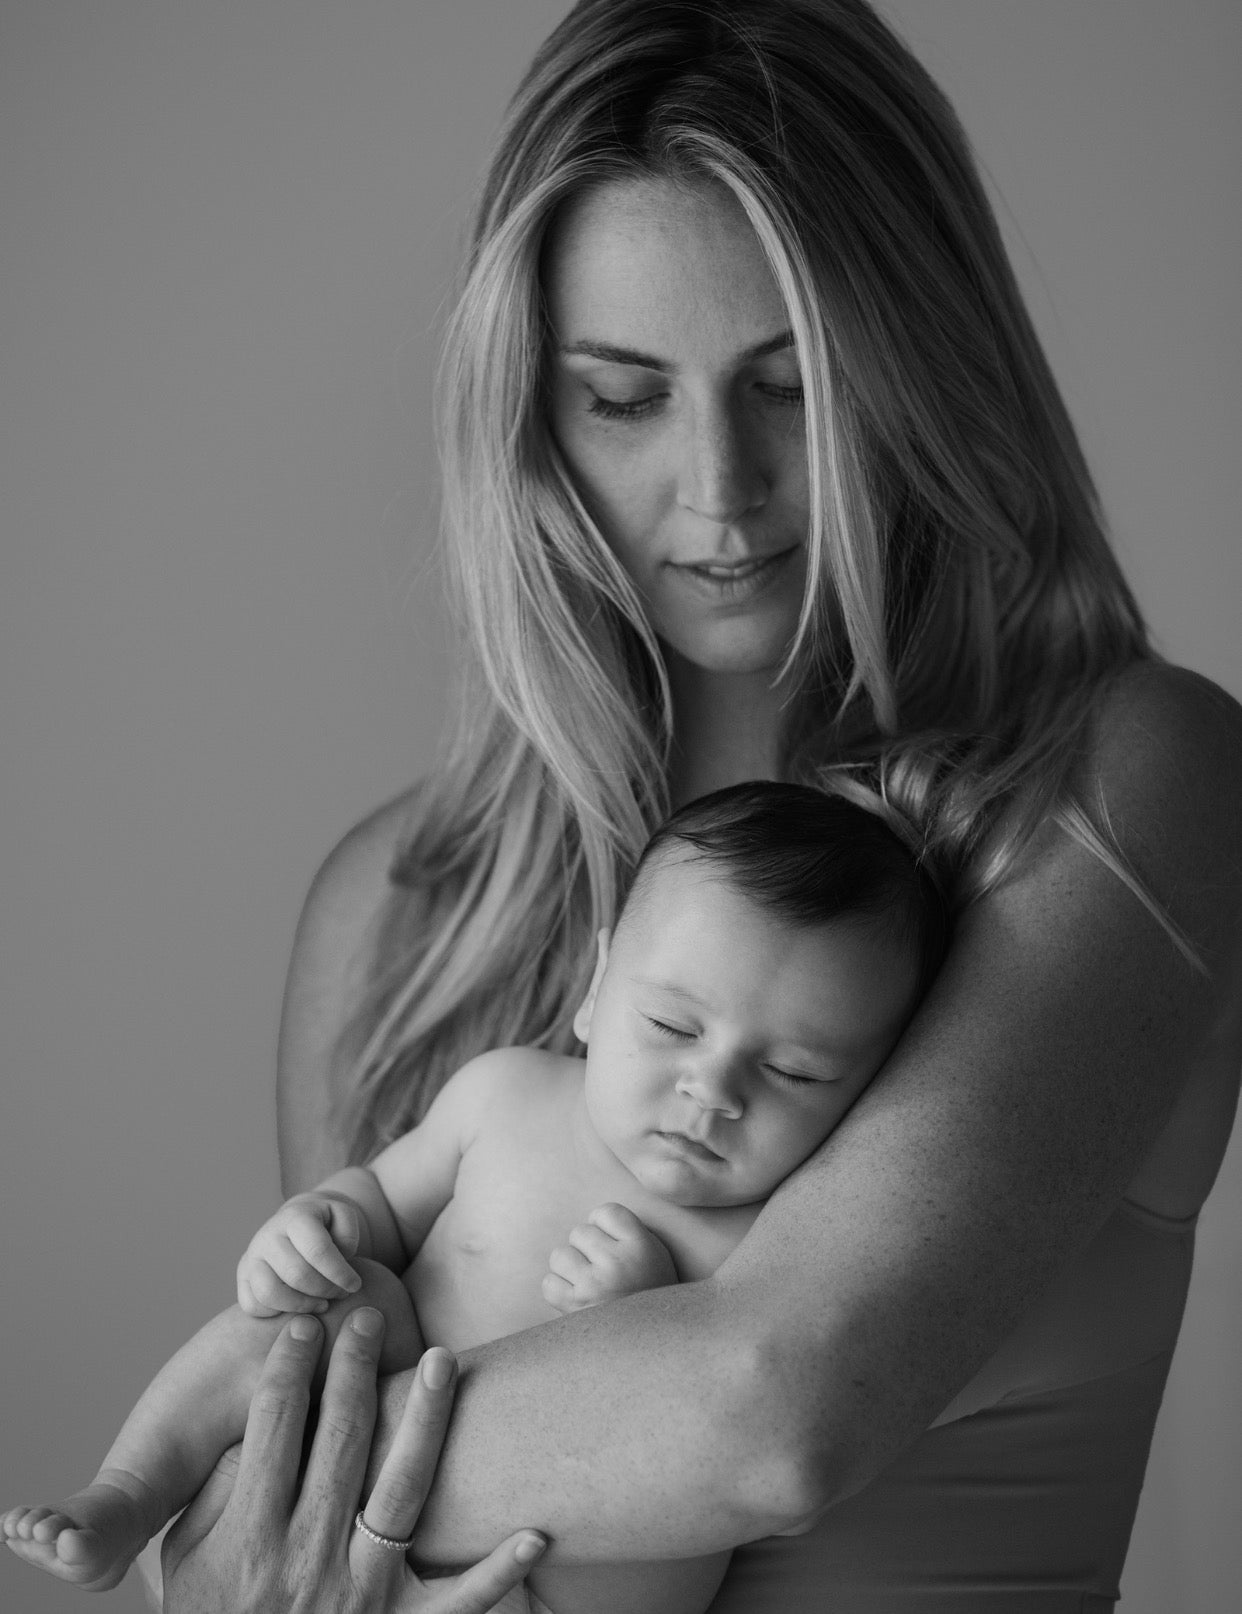 Selby Drummond holding her newborn daughter